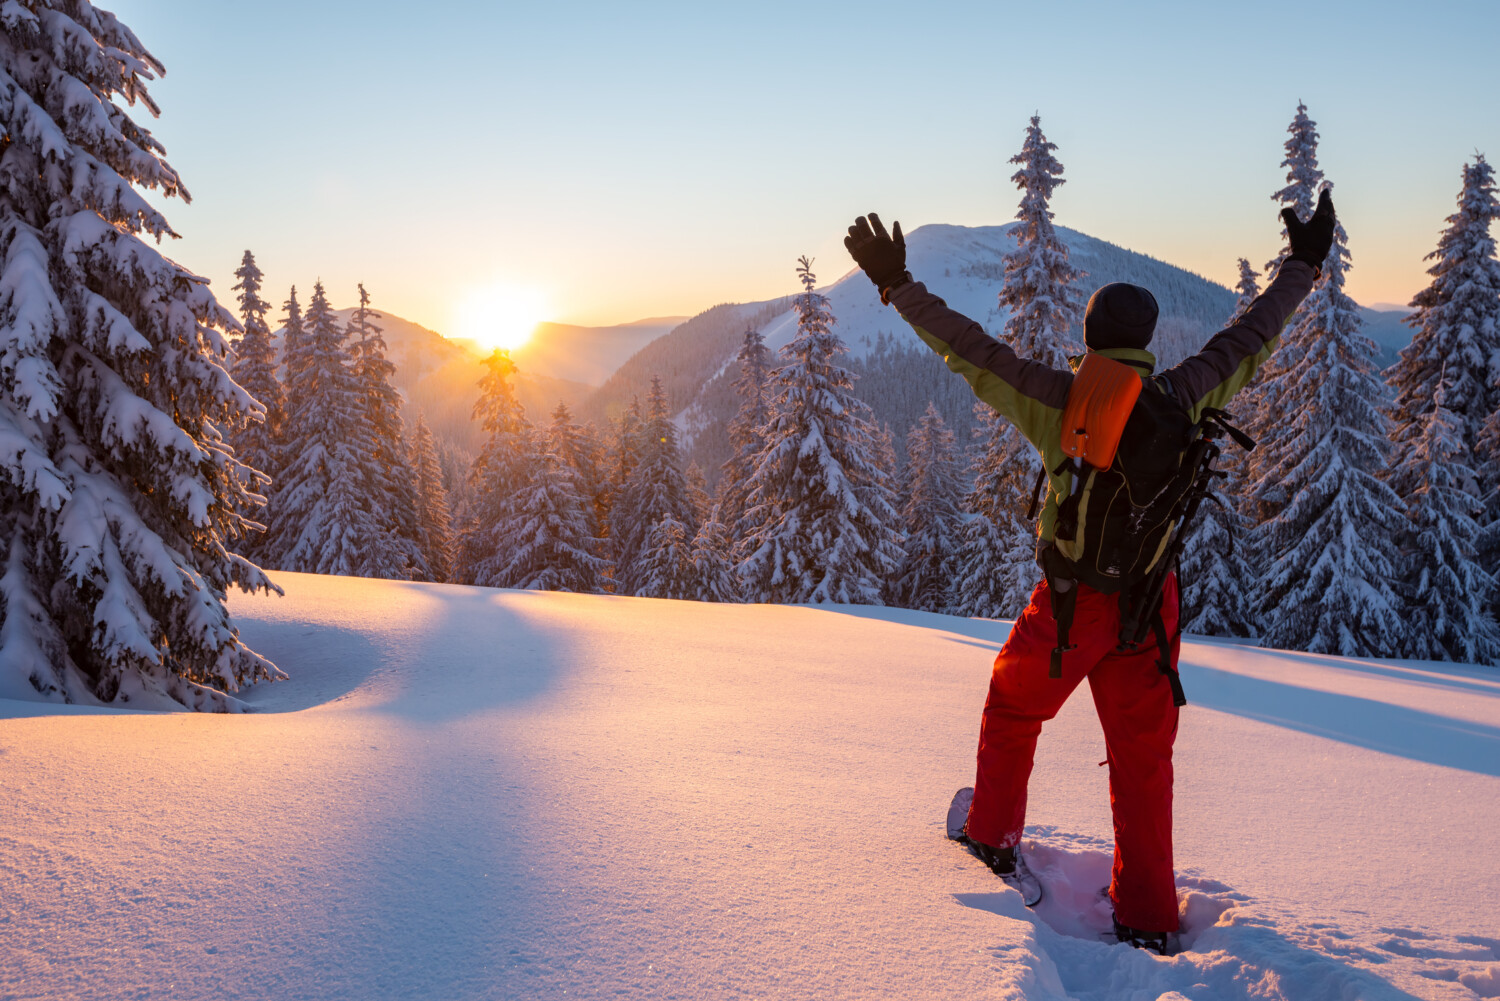 Snowshoer enjoys winter landscape with raised arms